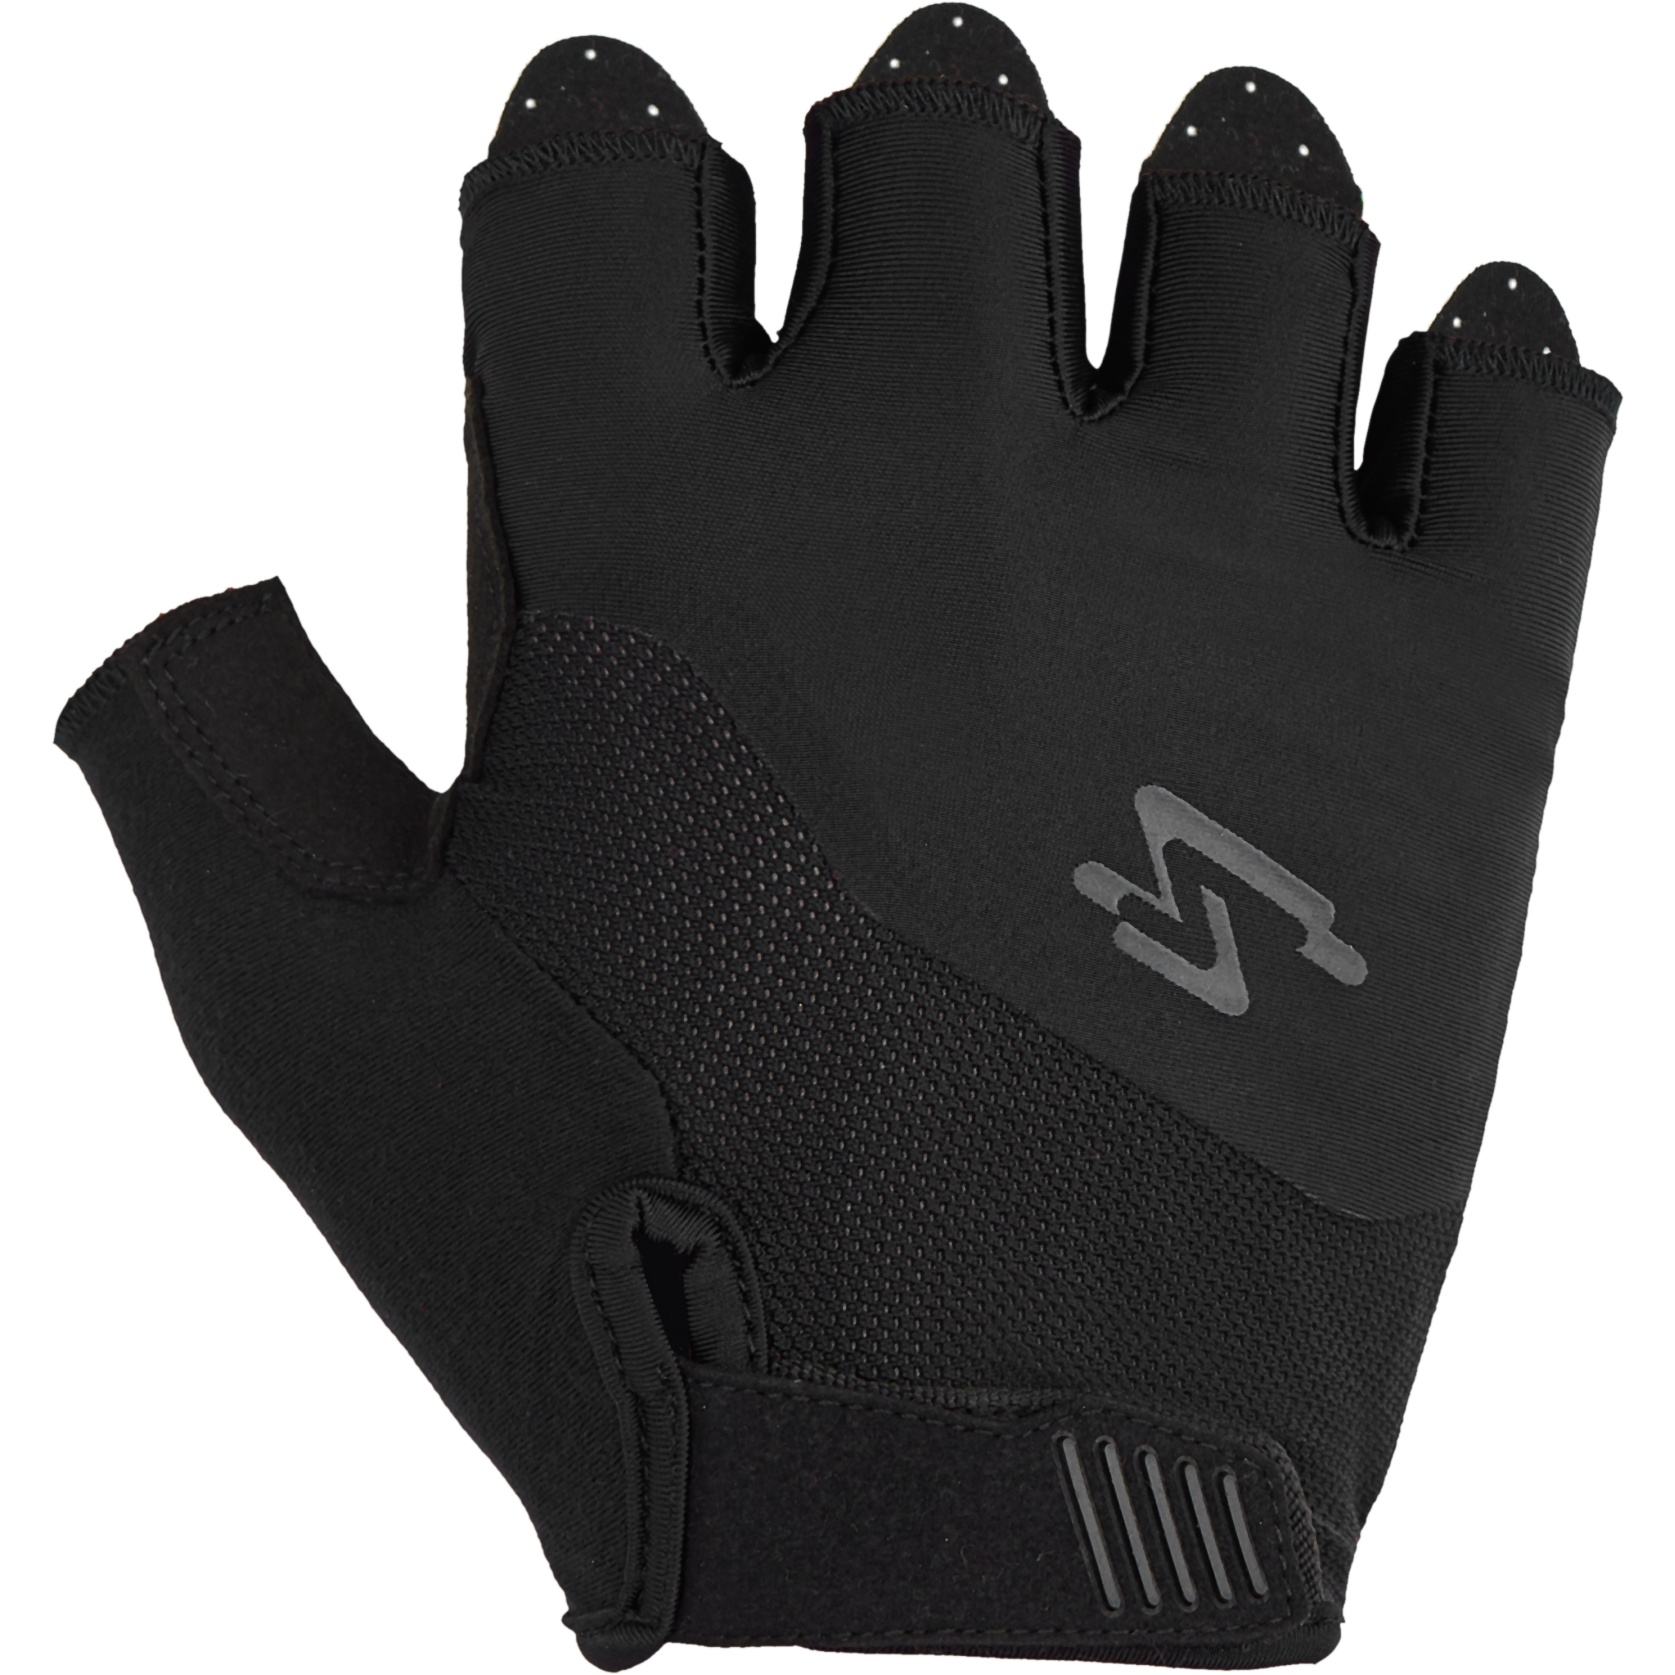 Produktbild von Spiuk TOP TEN Road Kurzfinger-Handschuhe - schwarz